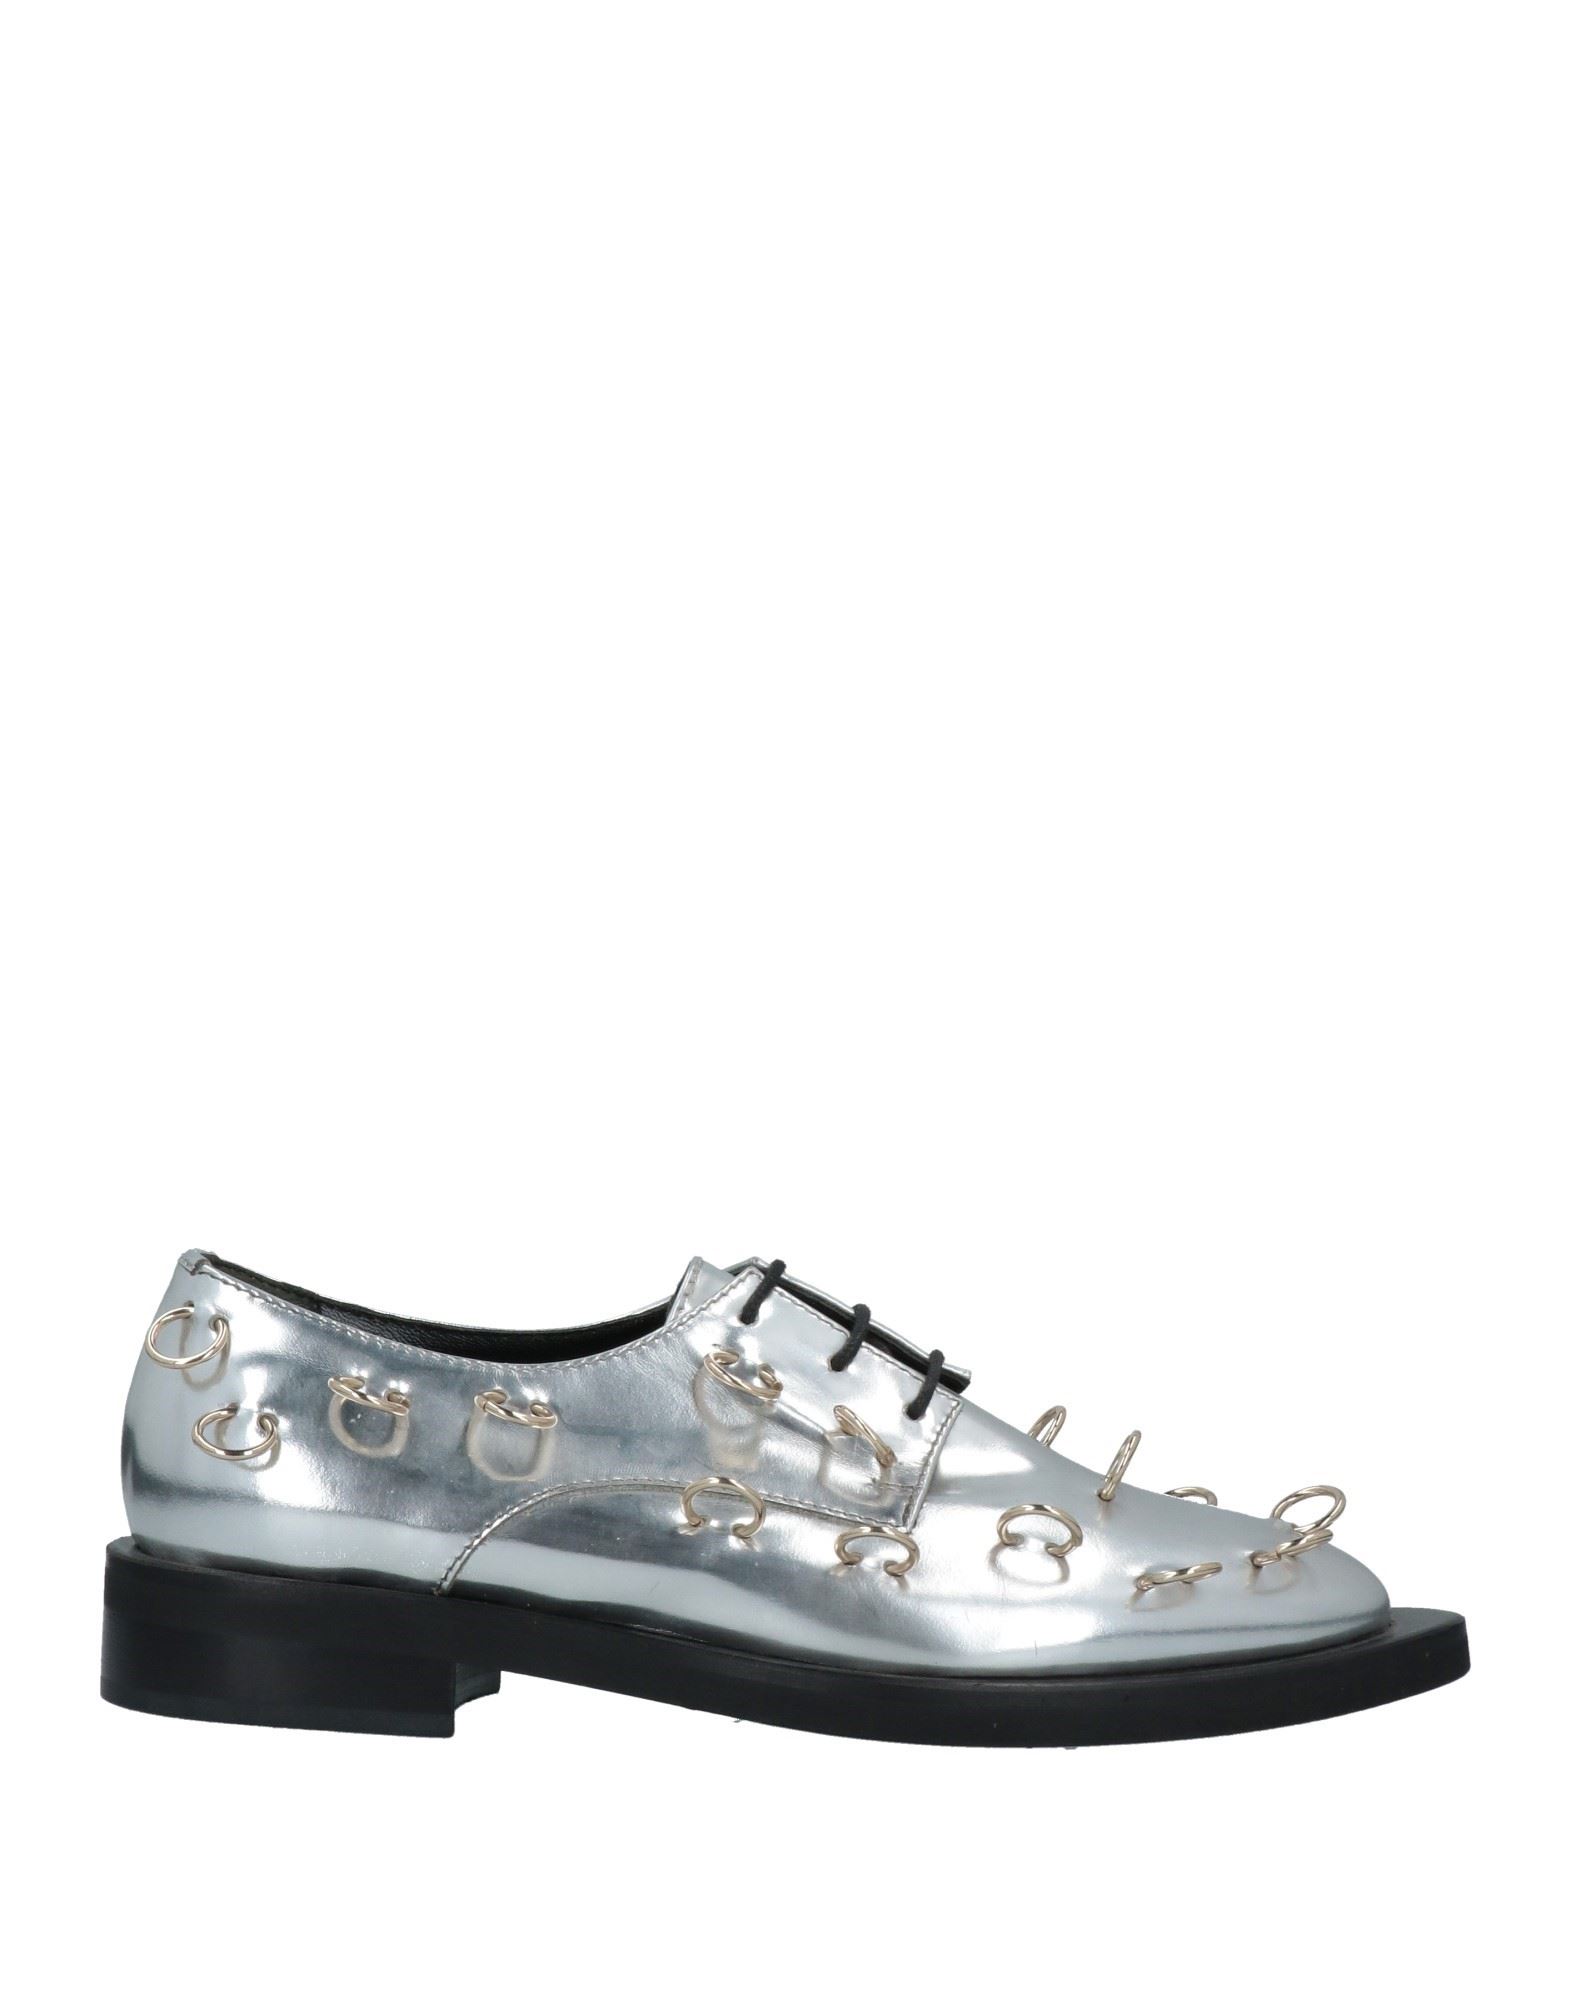 COLIAC MARTINA GRASSELLI Lace-up shoes